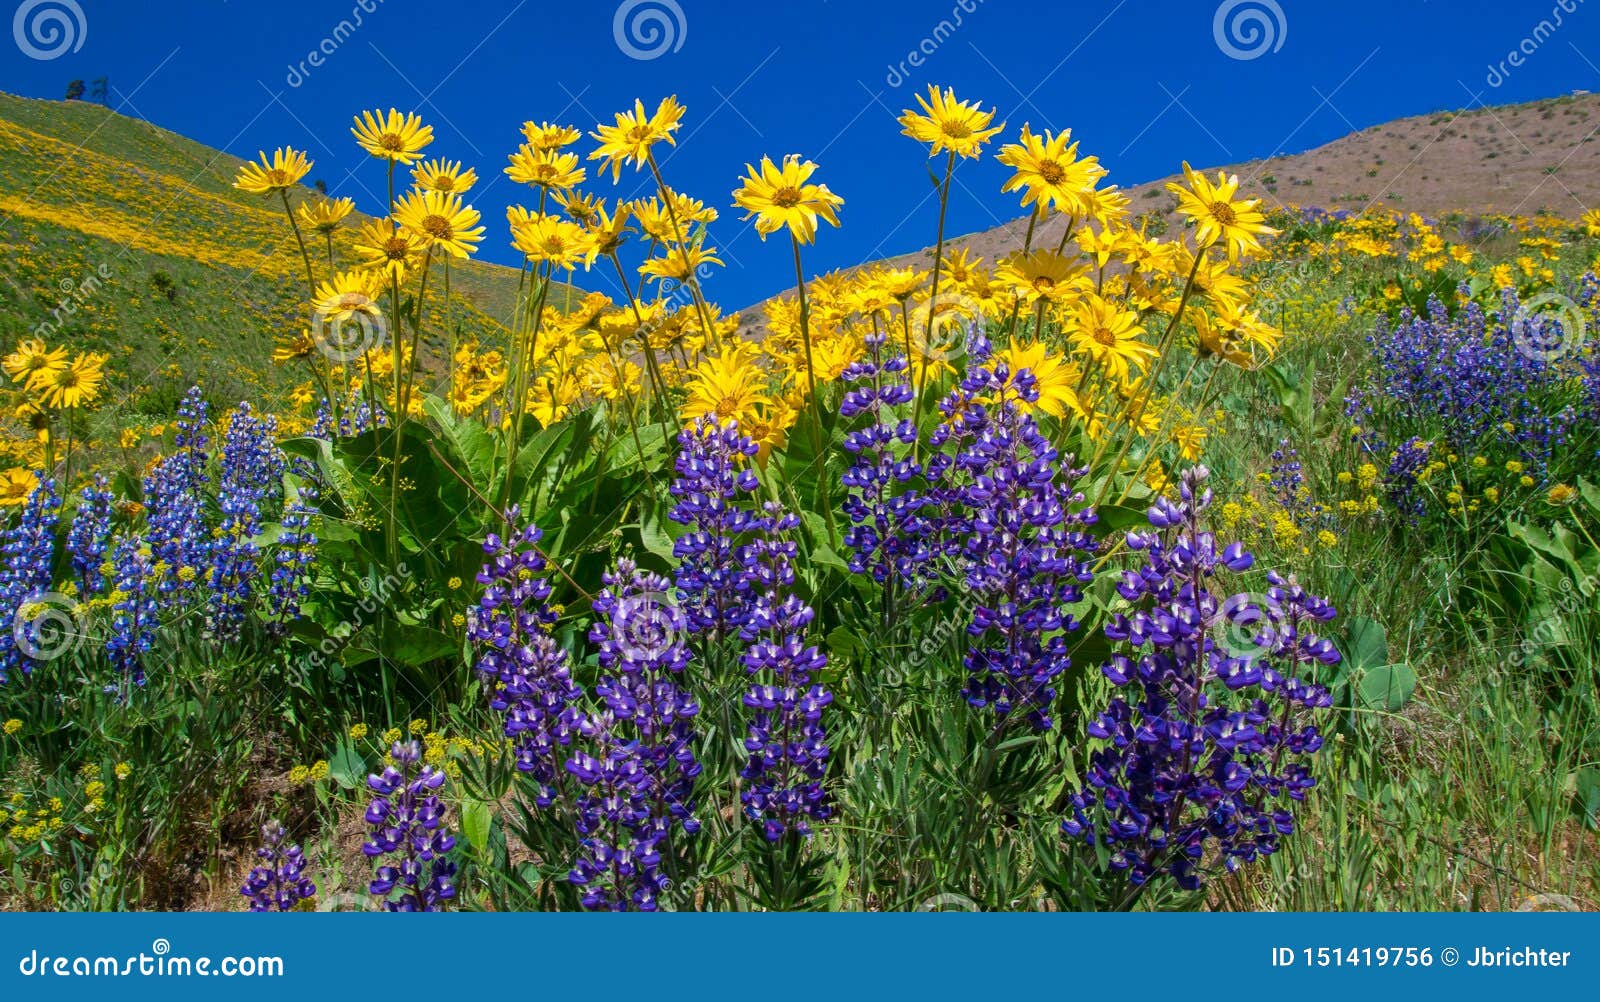 flowers at sage hills